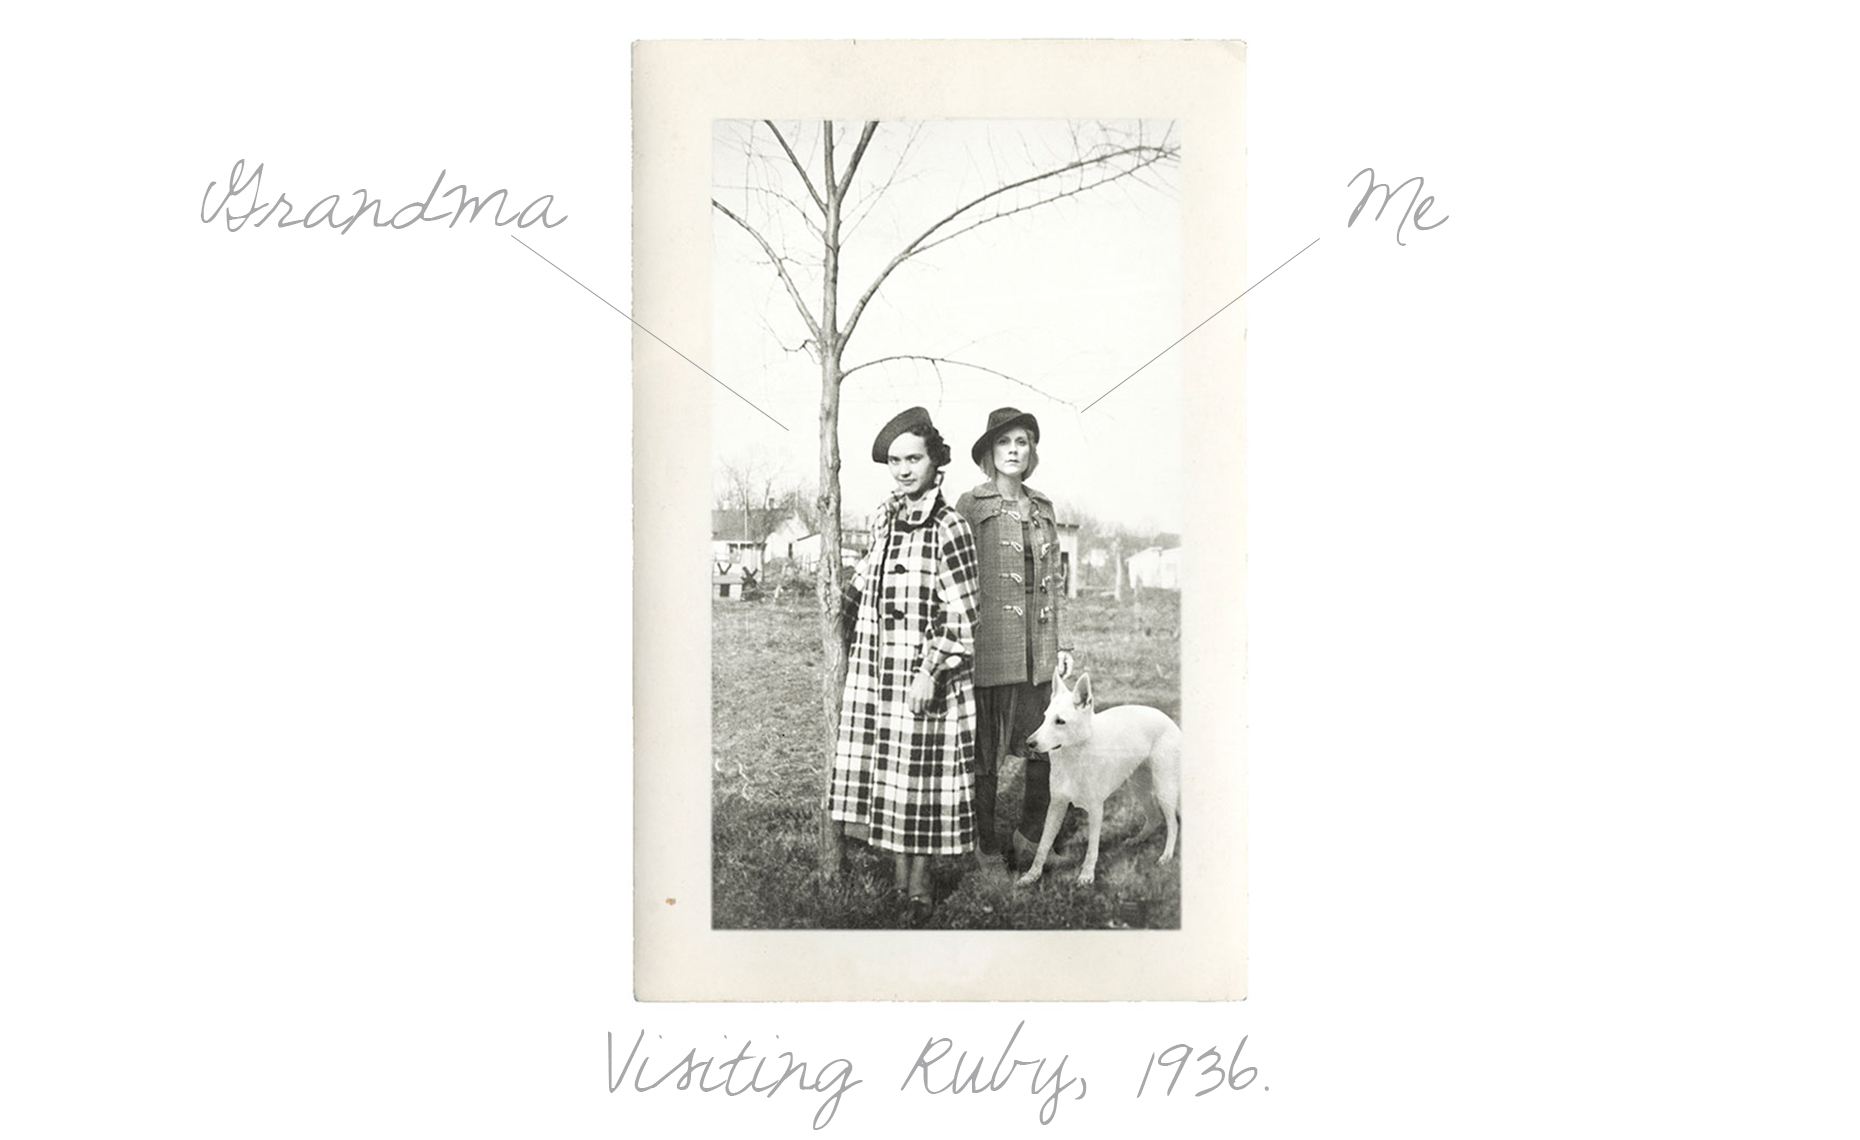 Visiting Ruby, 1936